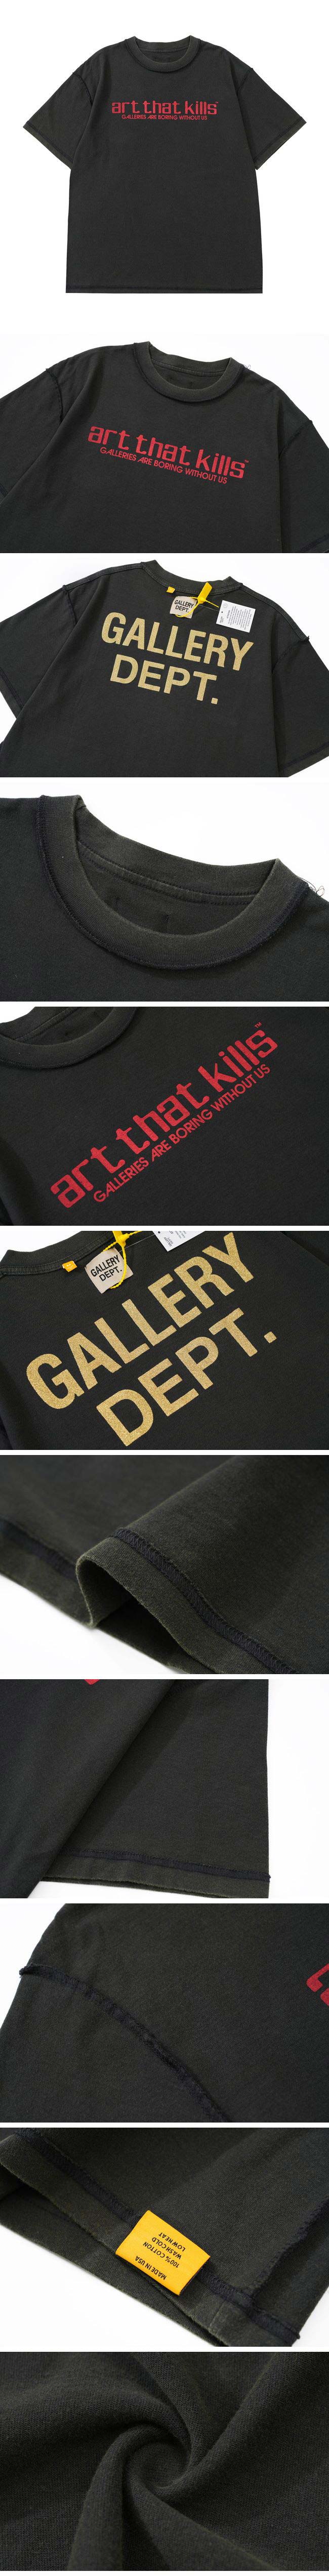 Gallery Dept. ATK Reversible French Logo Tee ギャラリーデプト フレンチロゴ リバーシブル Tシャツ